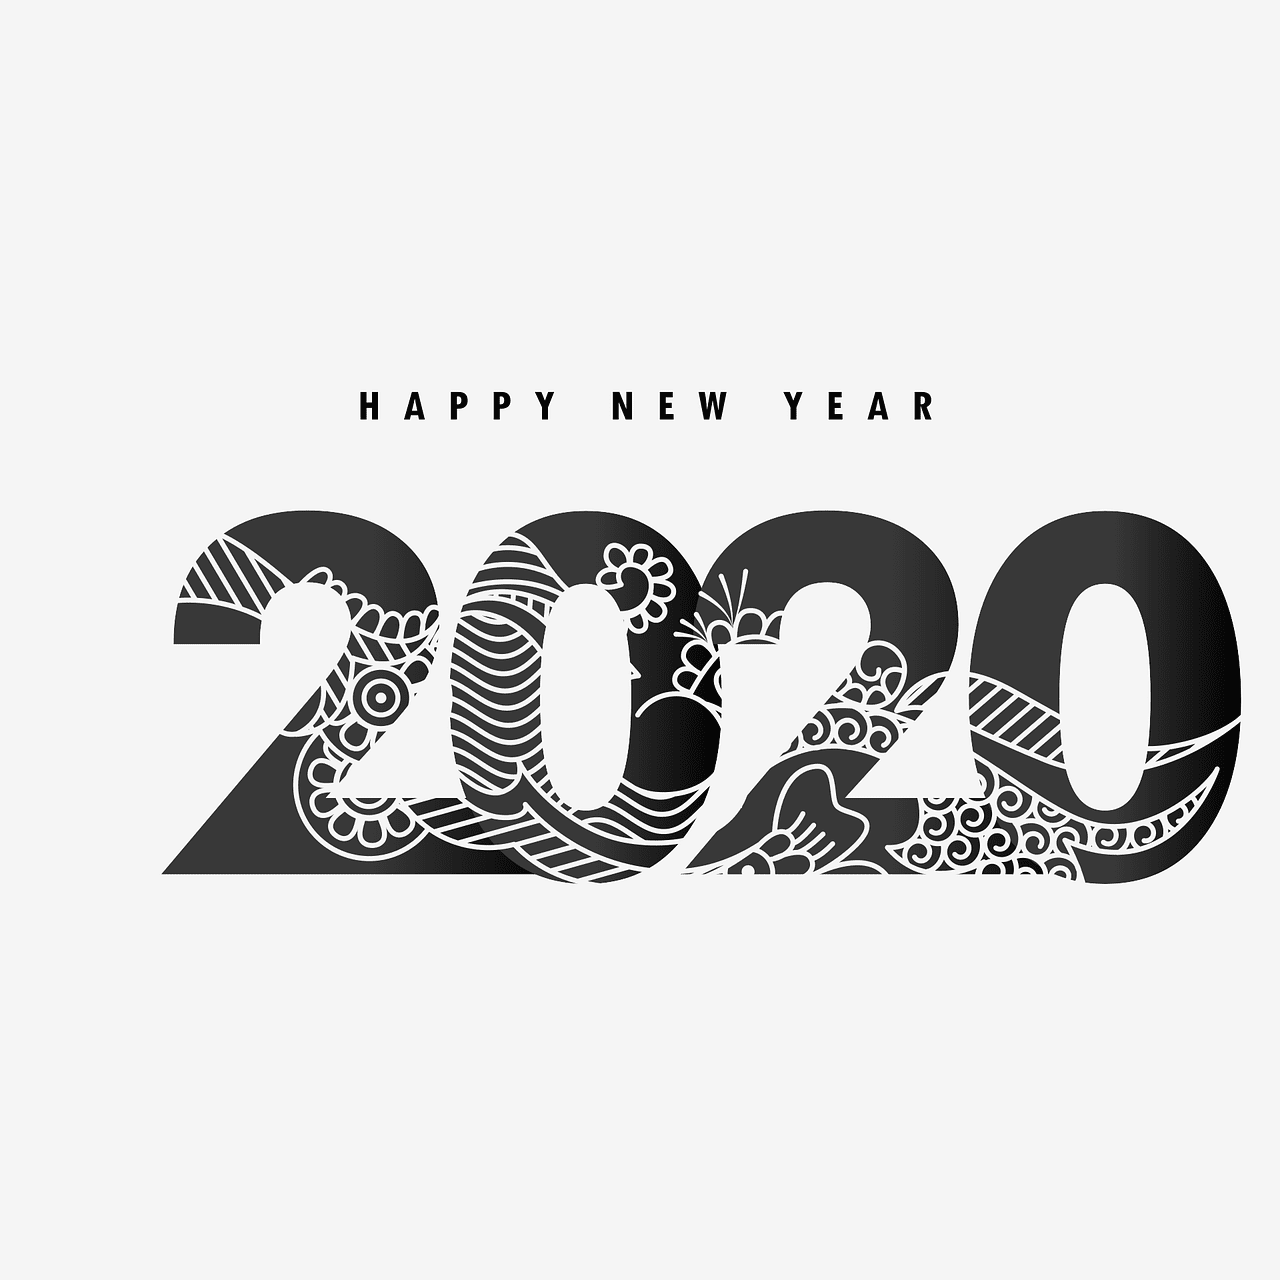 Happy New Year 2020 graphic